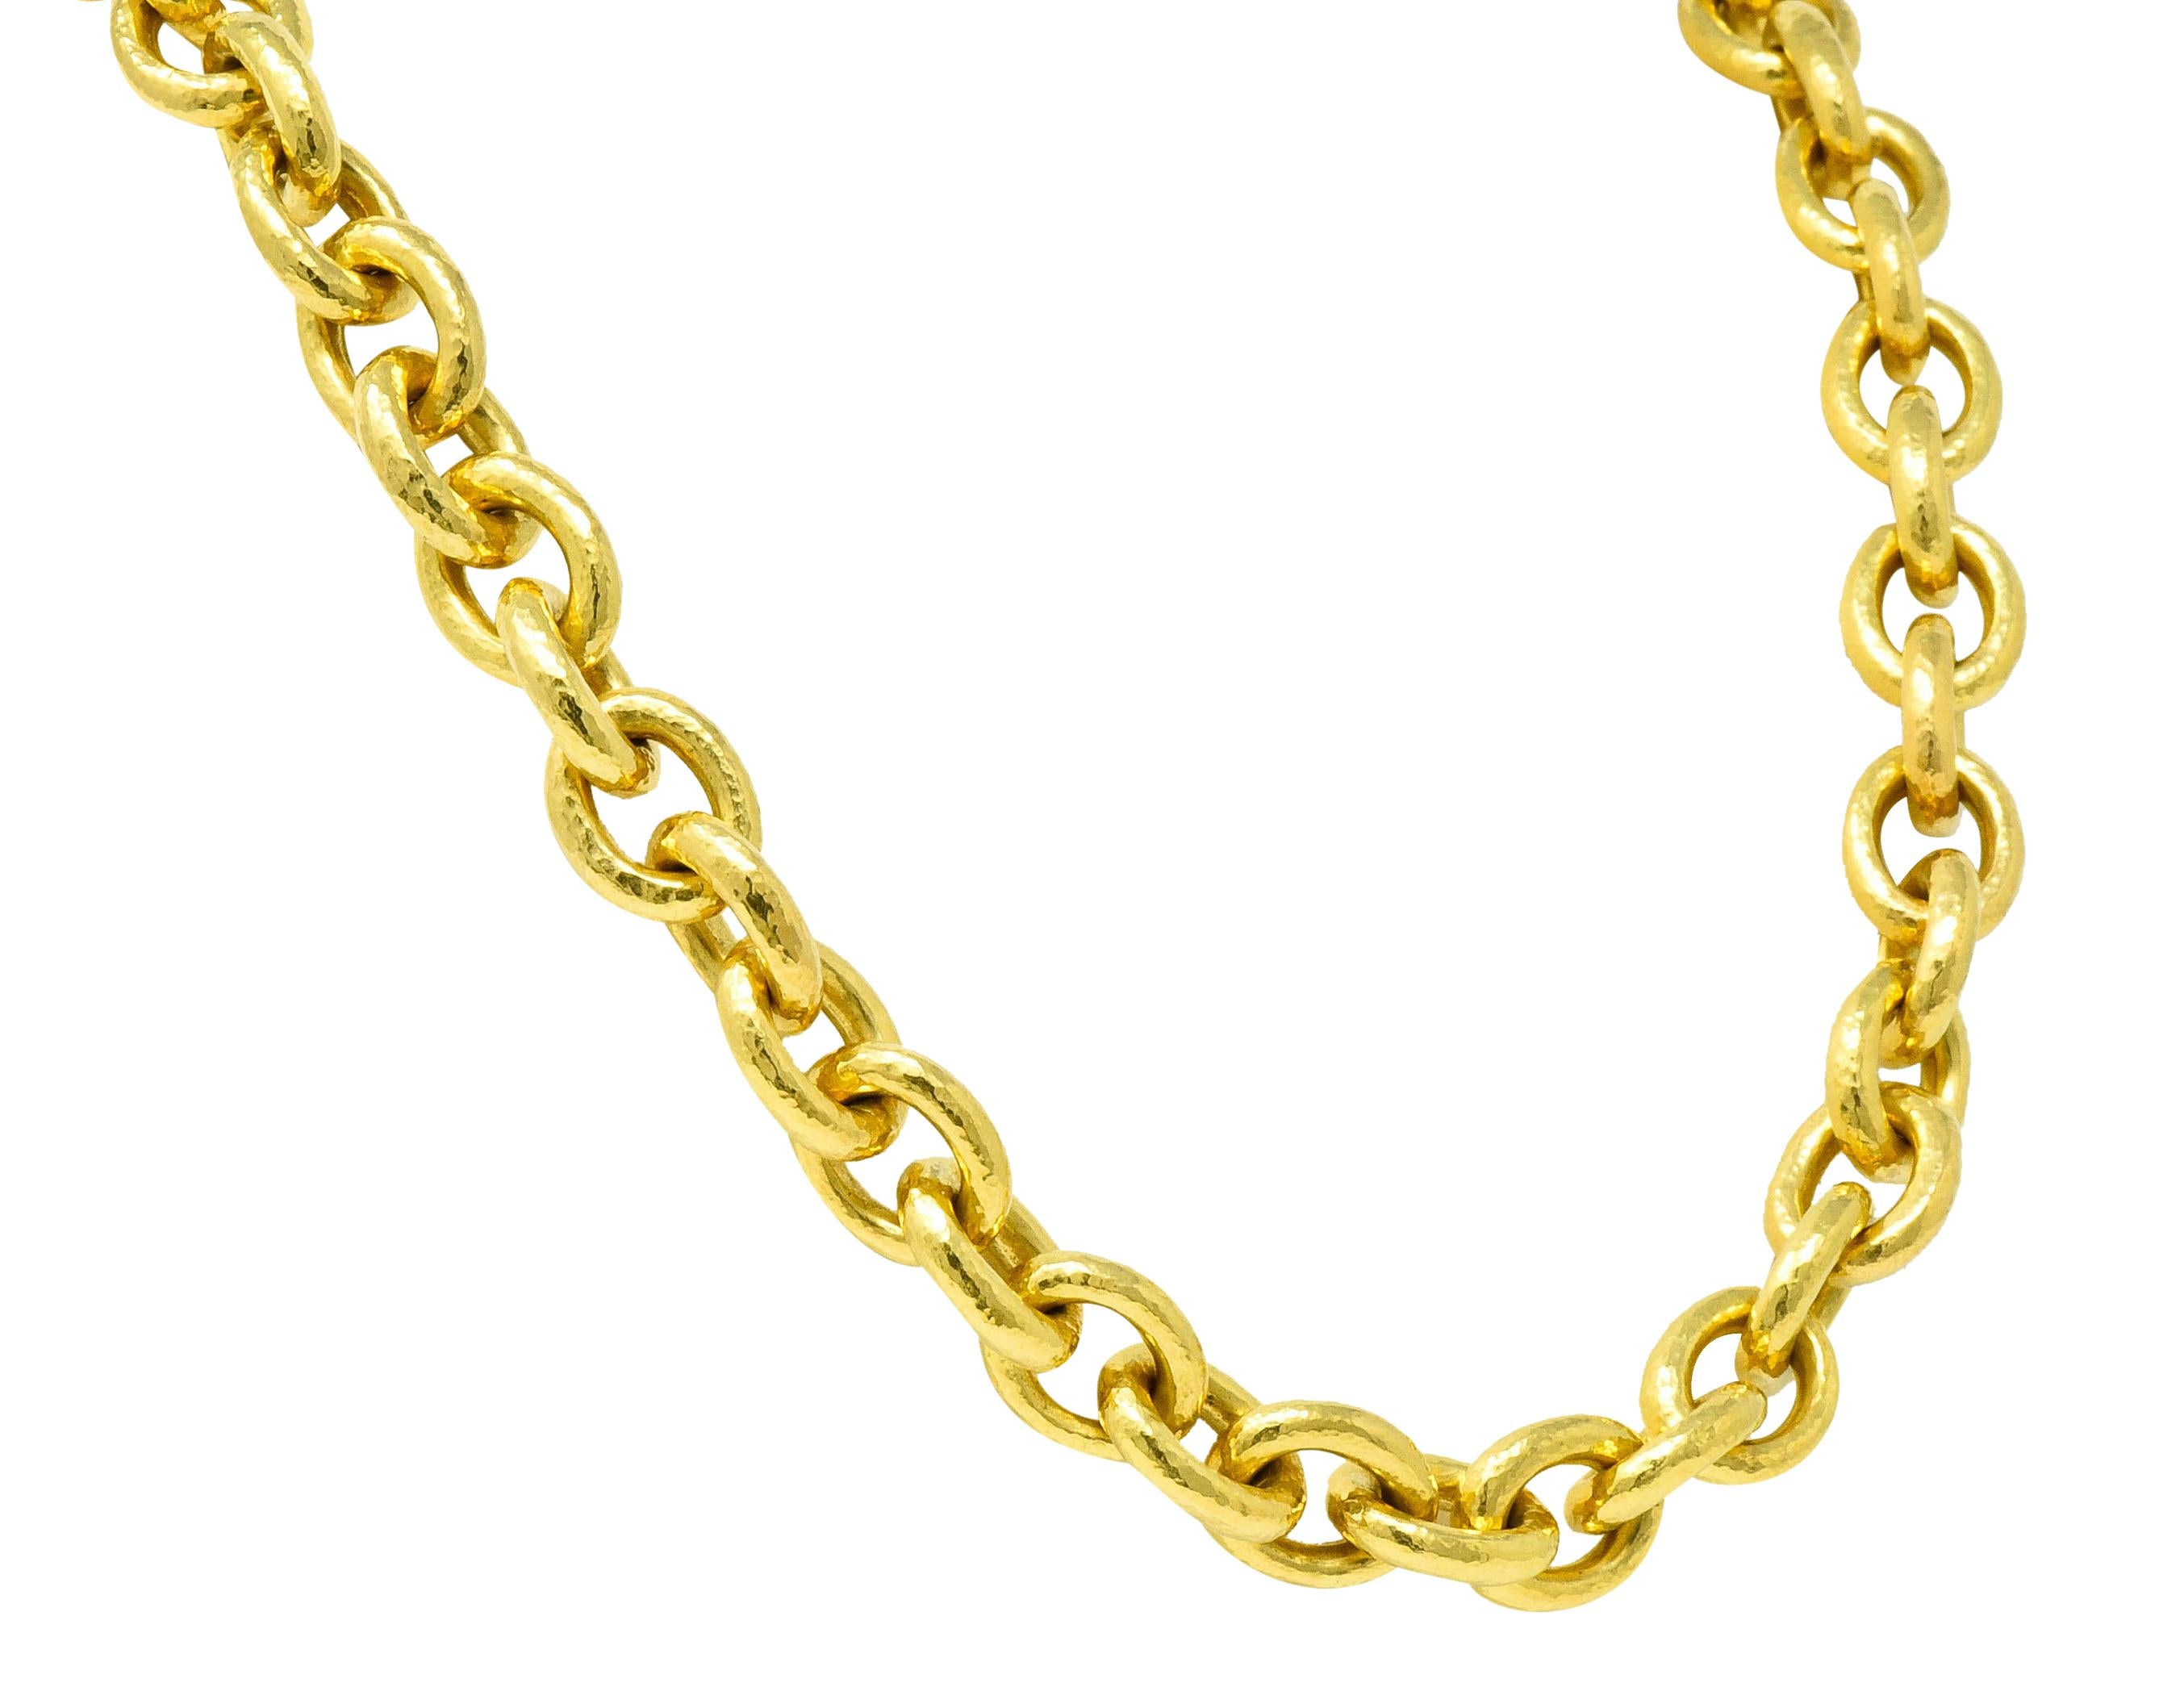 19 gold chain